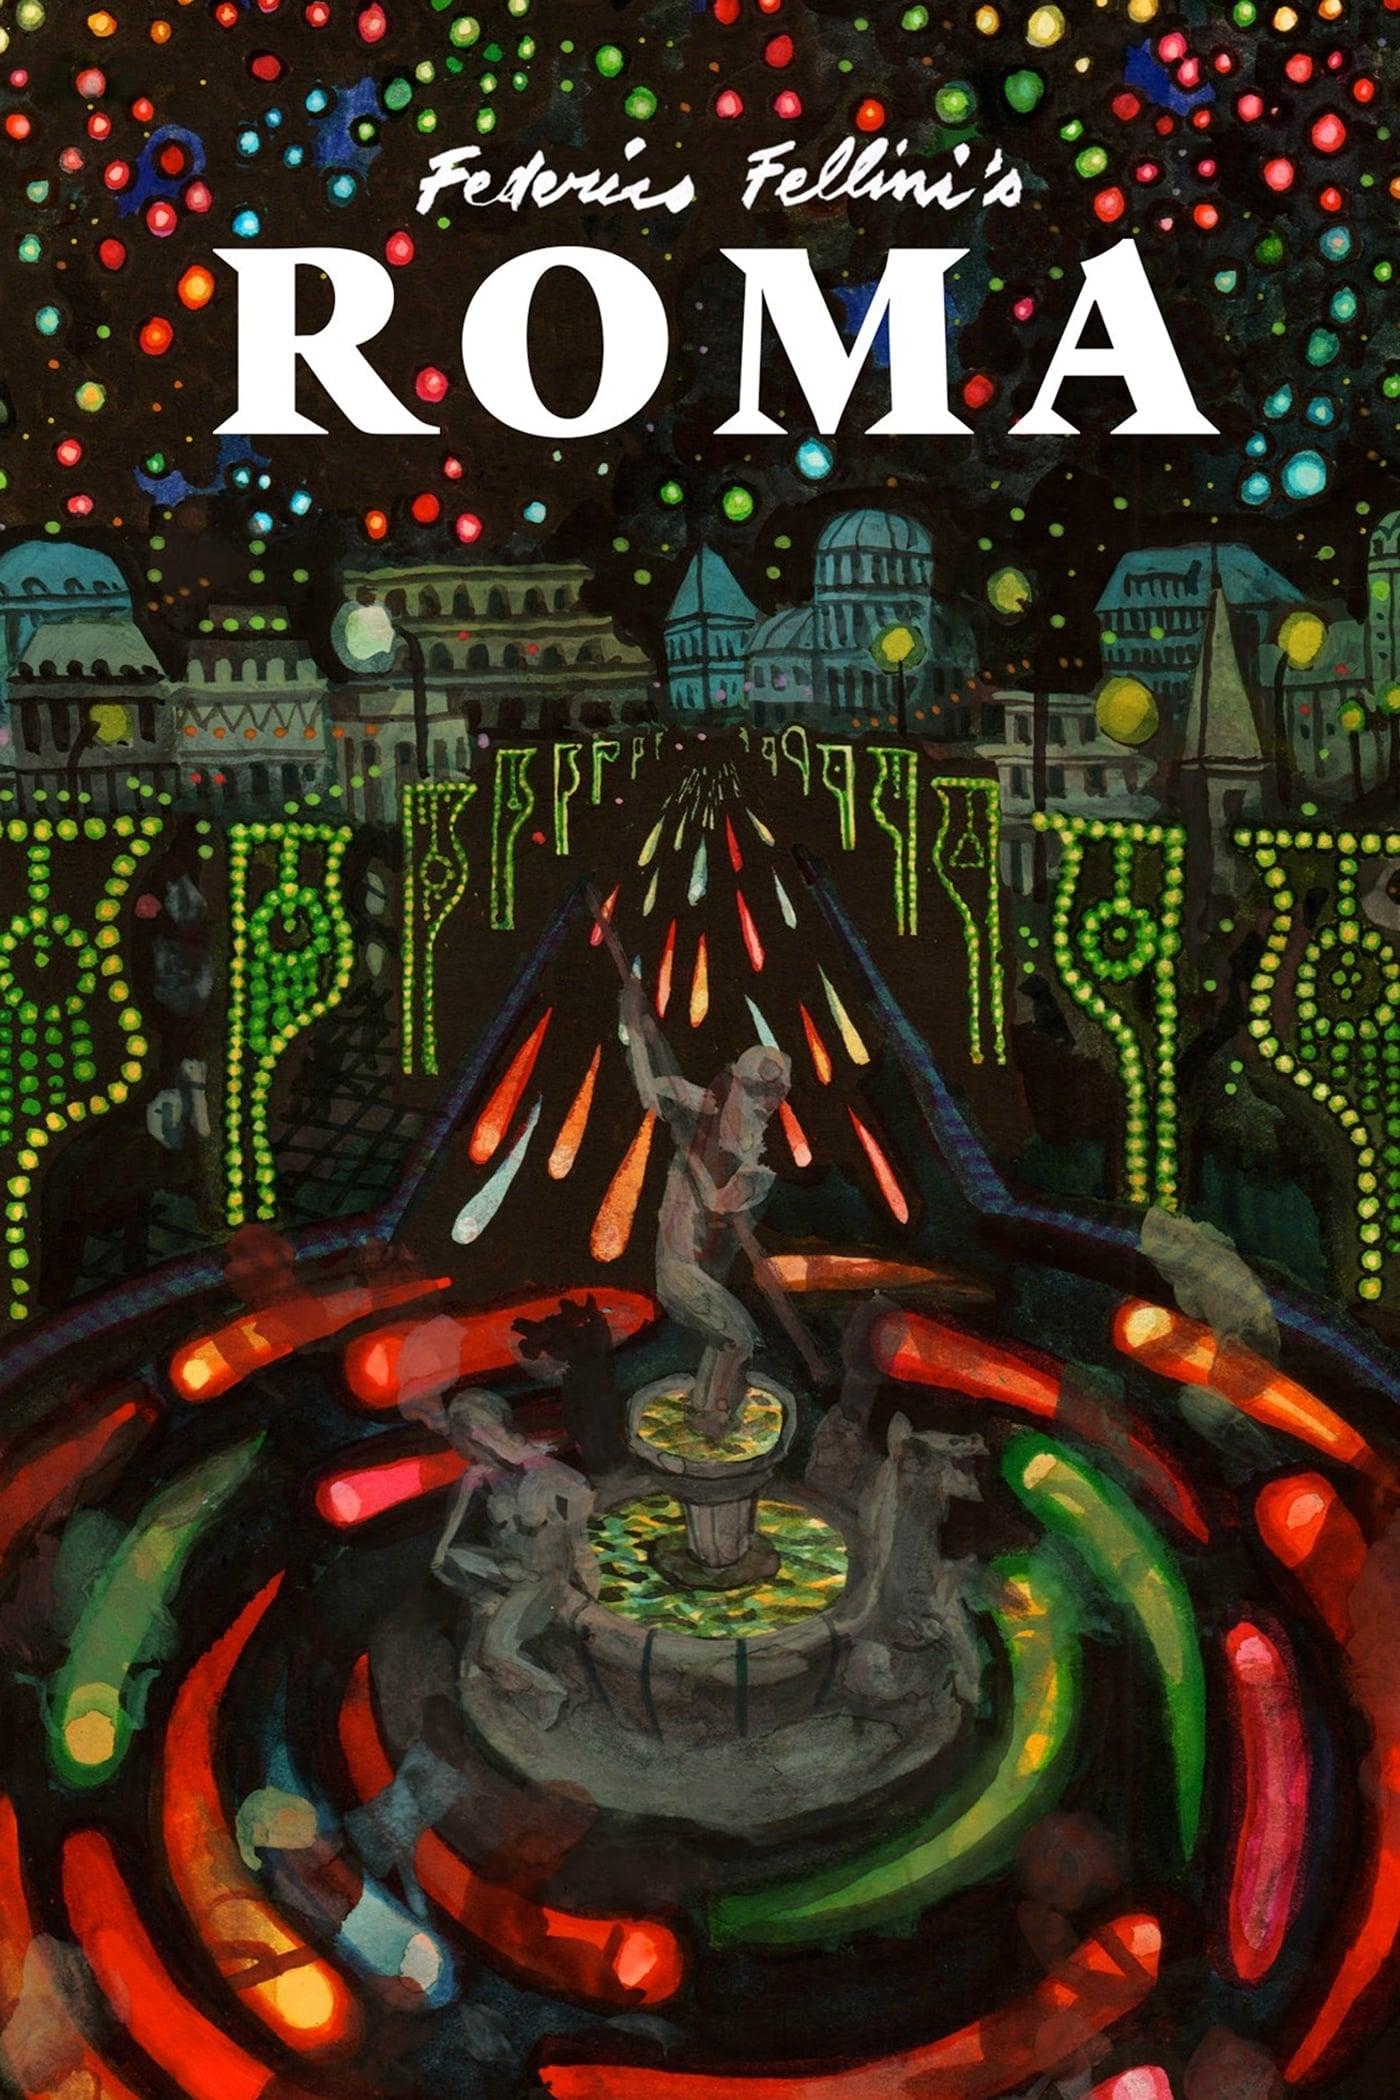 Fellinis Roma poster